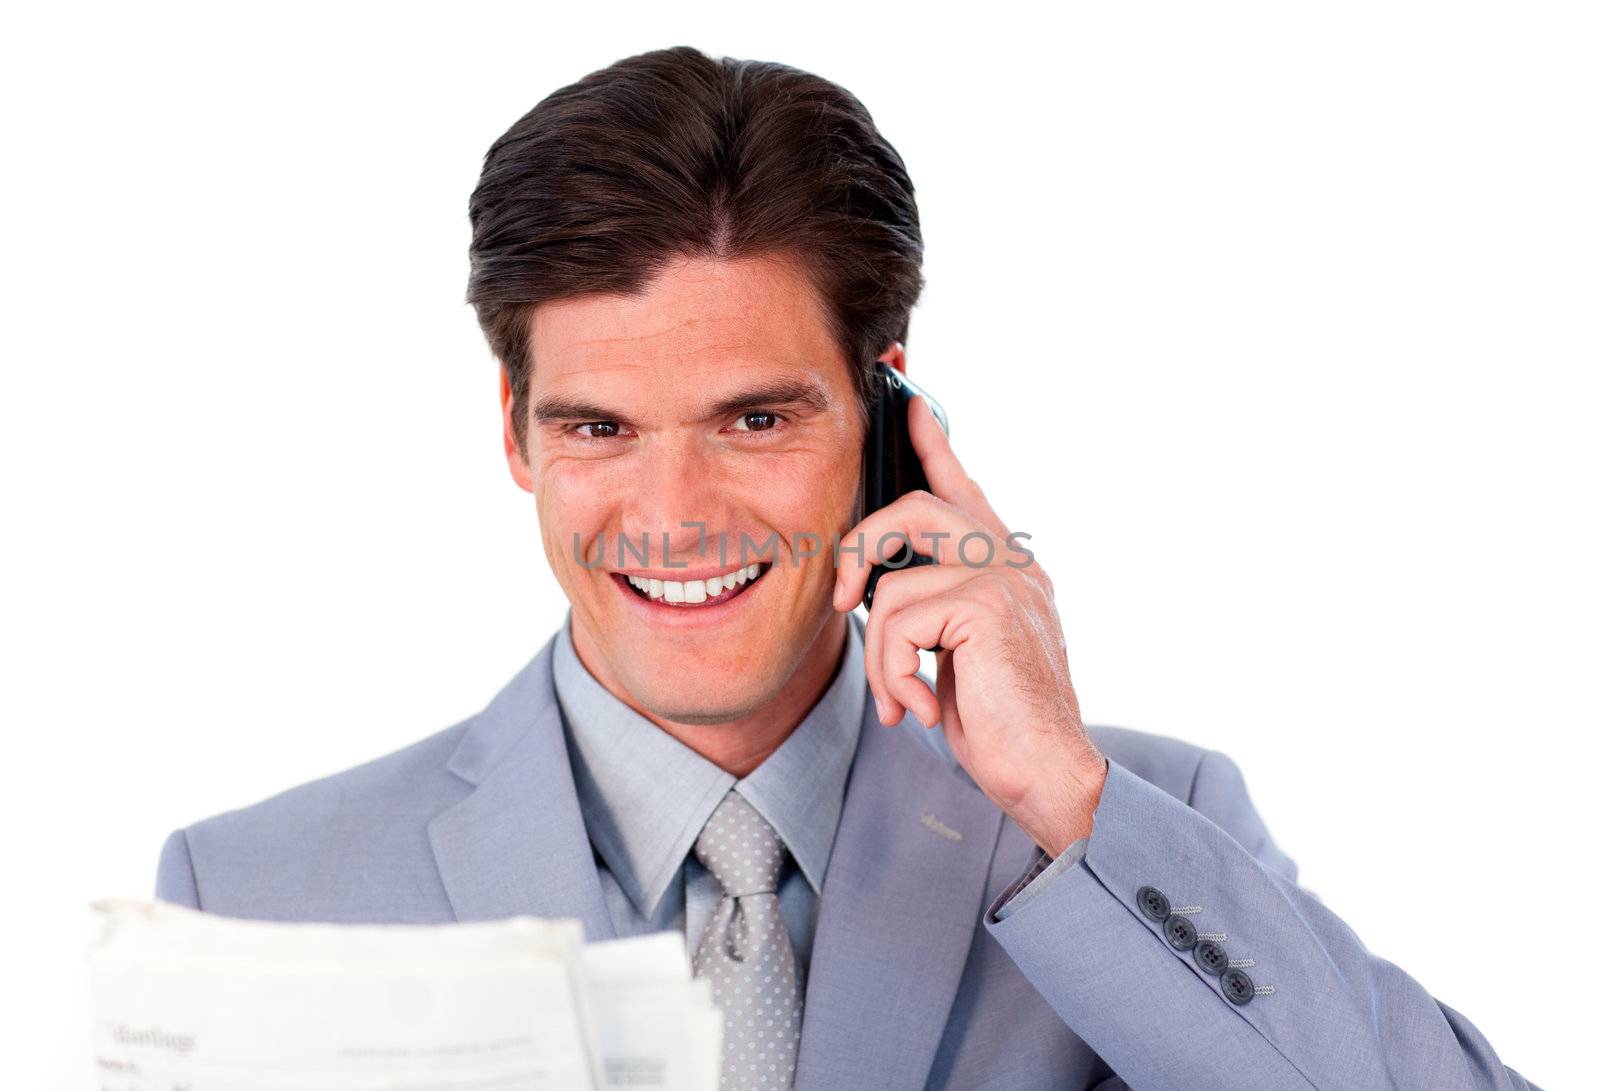 Assertive businessman on phone holding a newspaper  by Wavebreakmedia